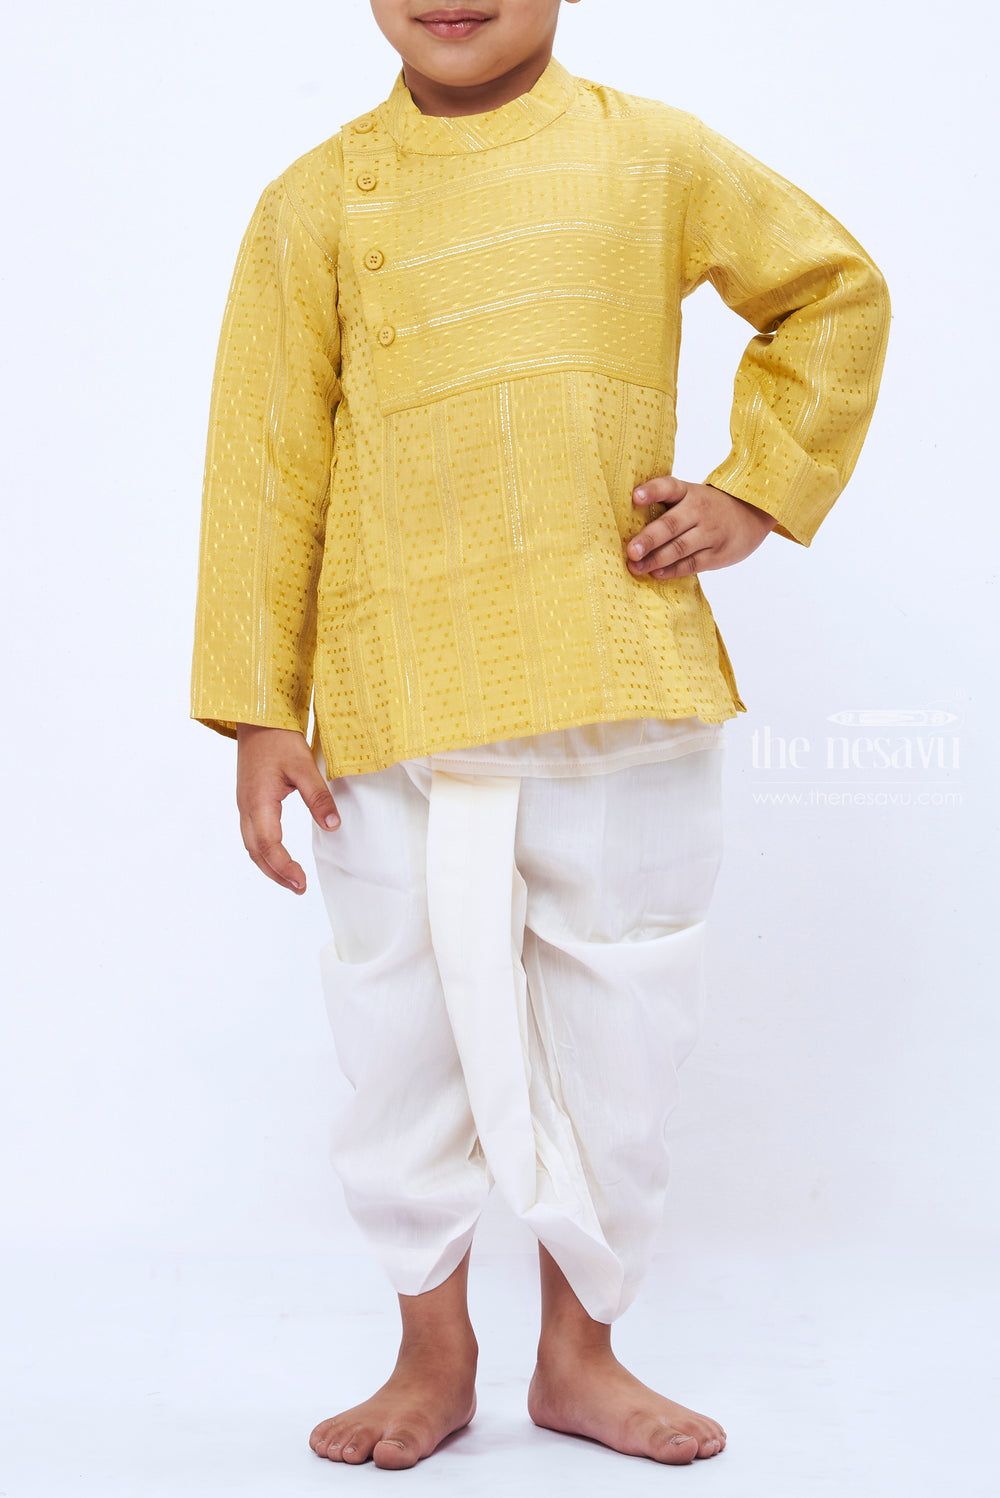 The Nesavu Boys Dothi Set Vibrant Yellow Kurta with White Dhoti Set Infant Boys Party Dress Nesavu Boys Yellow Kurta and White Dhoti Set | Festive Ethnic Wear | Bright Traditional Attire | The Nesavu